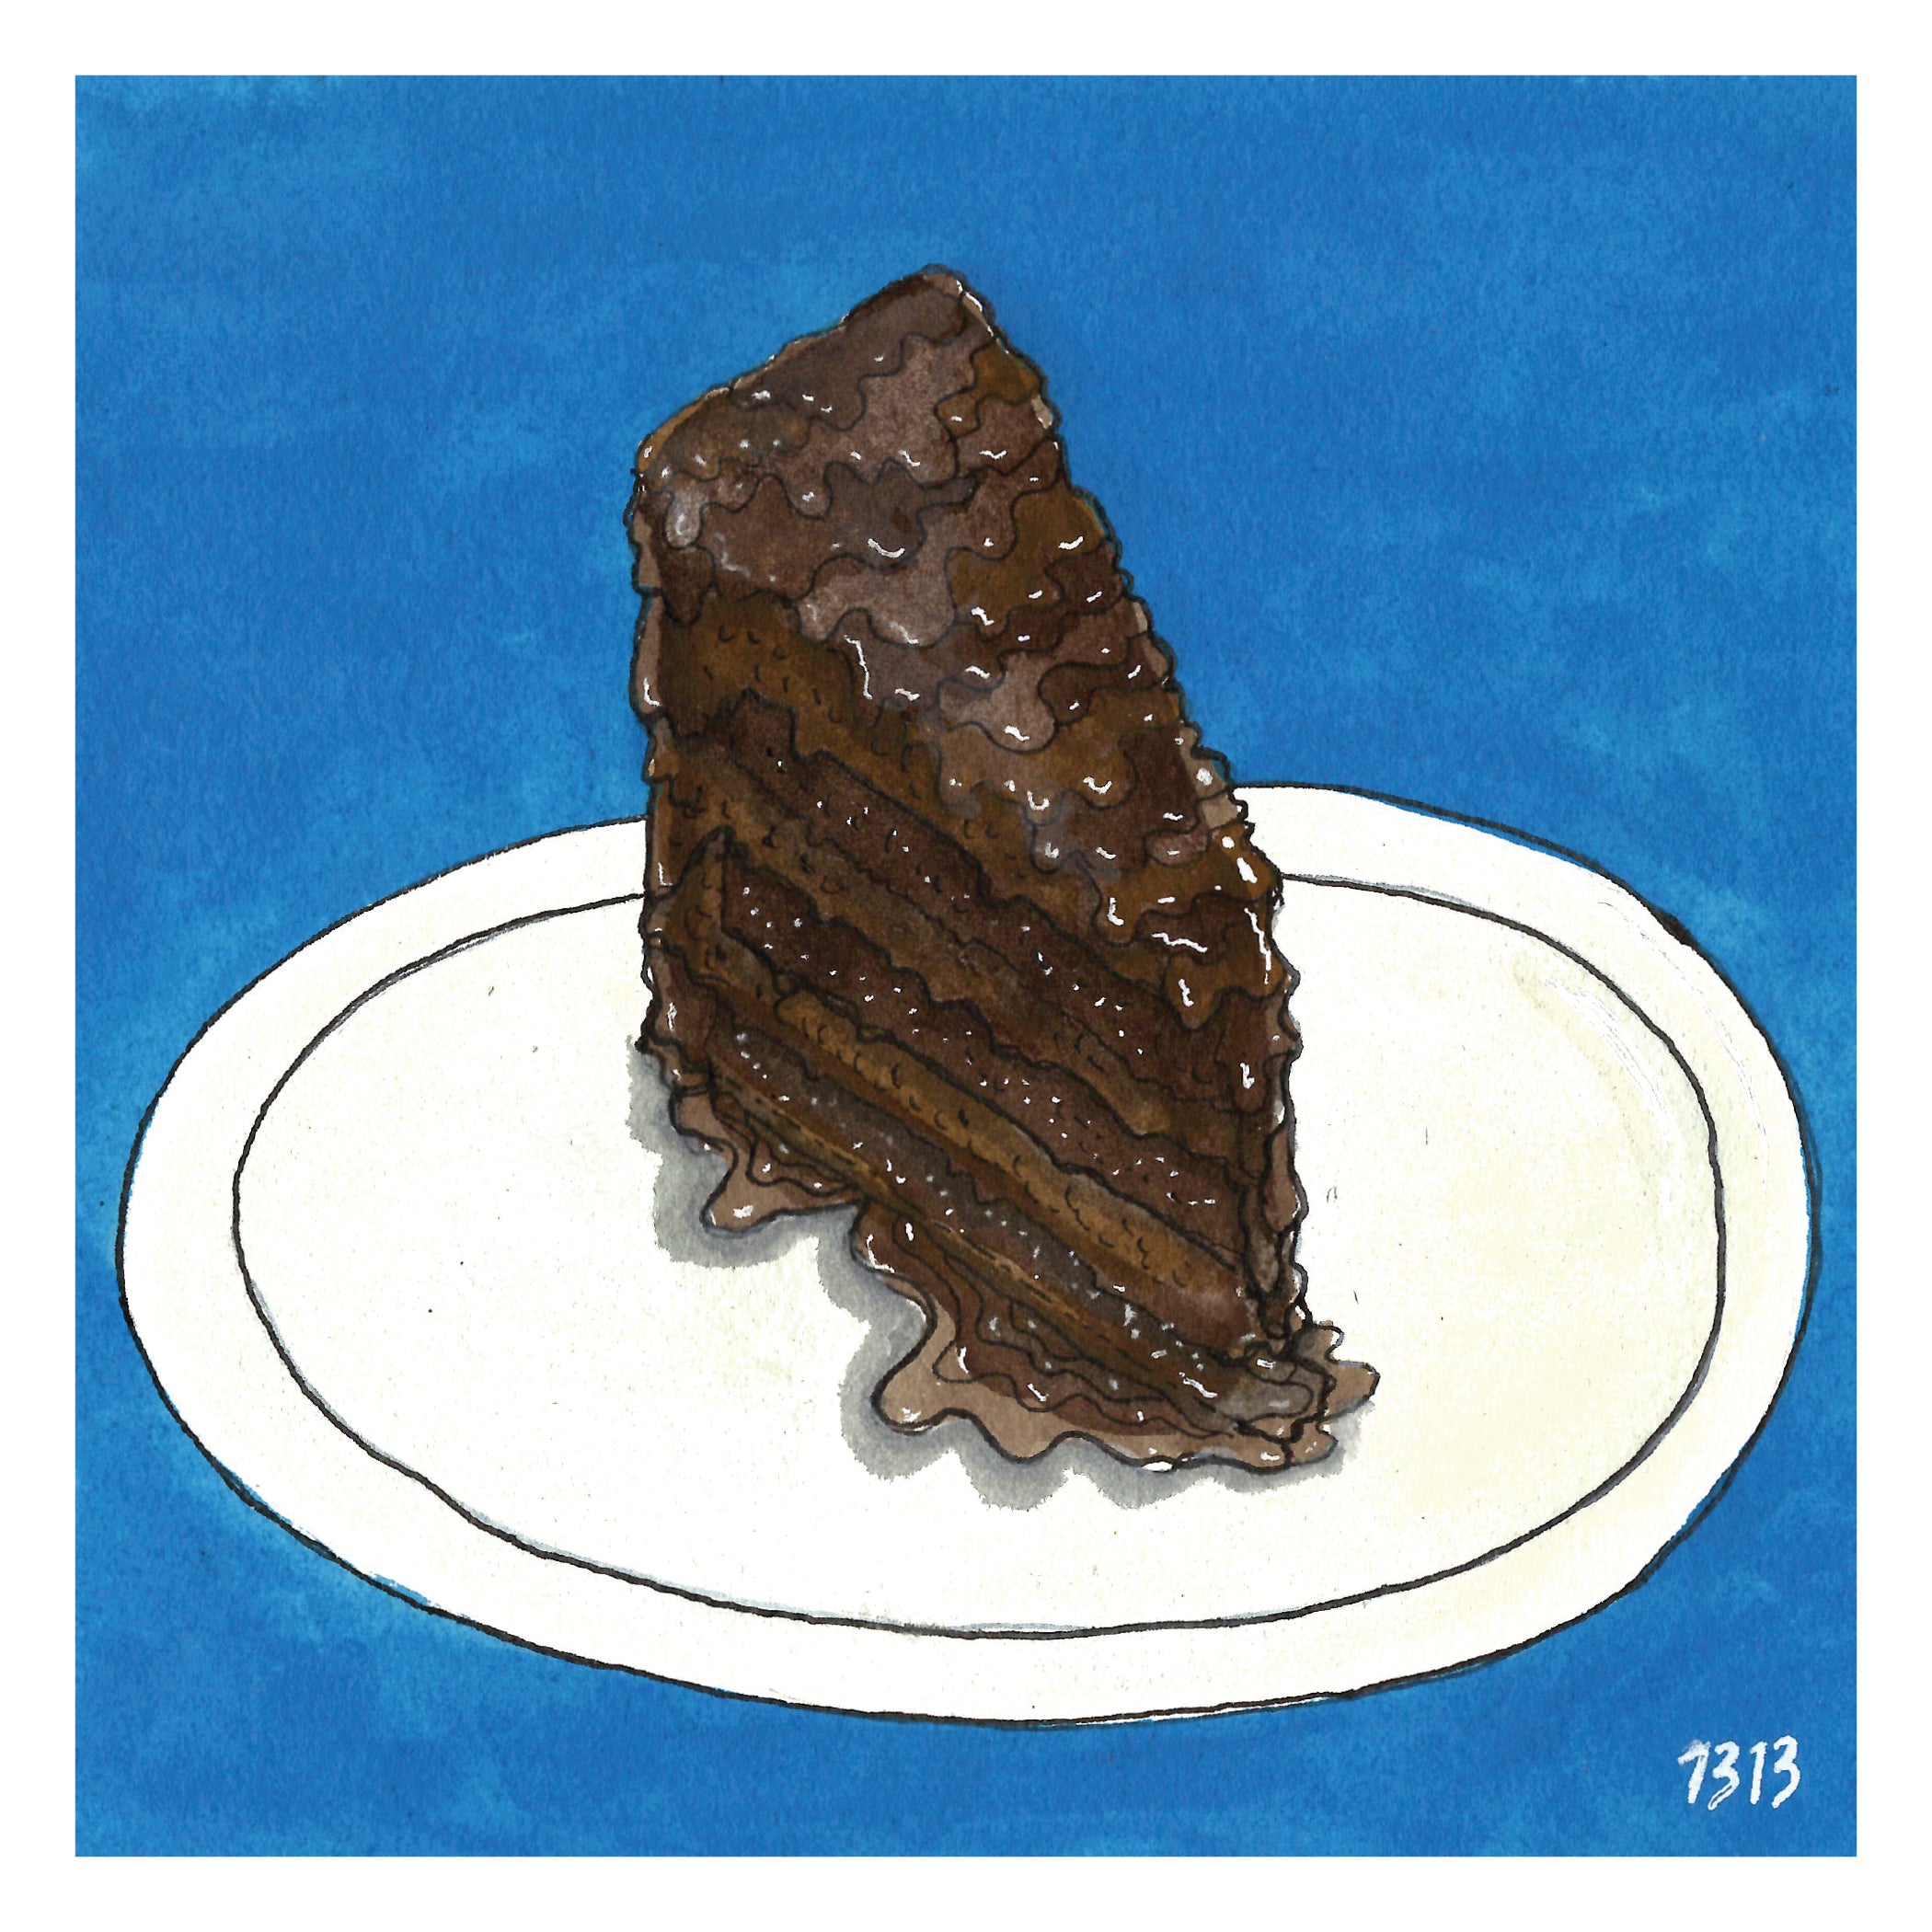 chocolate cake slice drawing